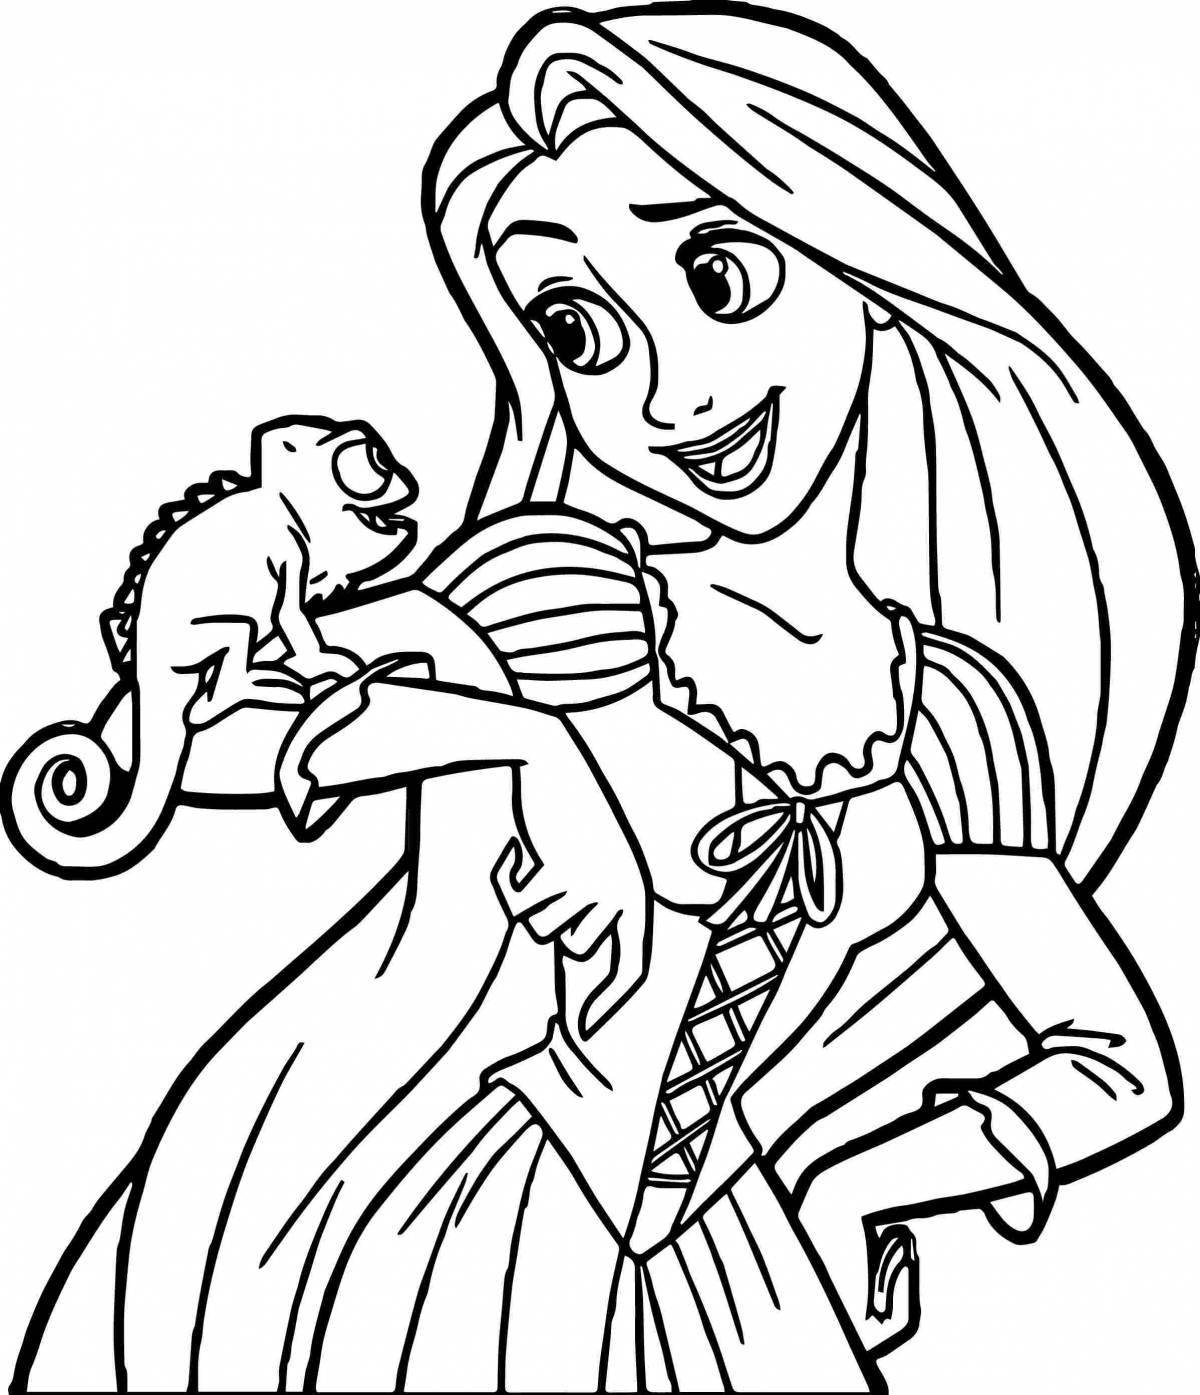 Disney glamor coloring book for girls